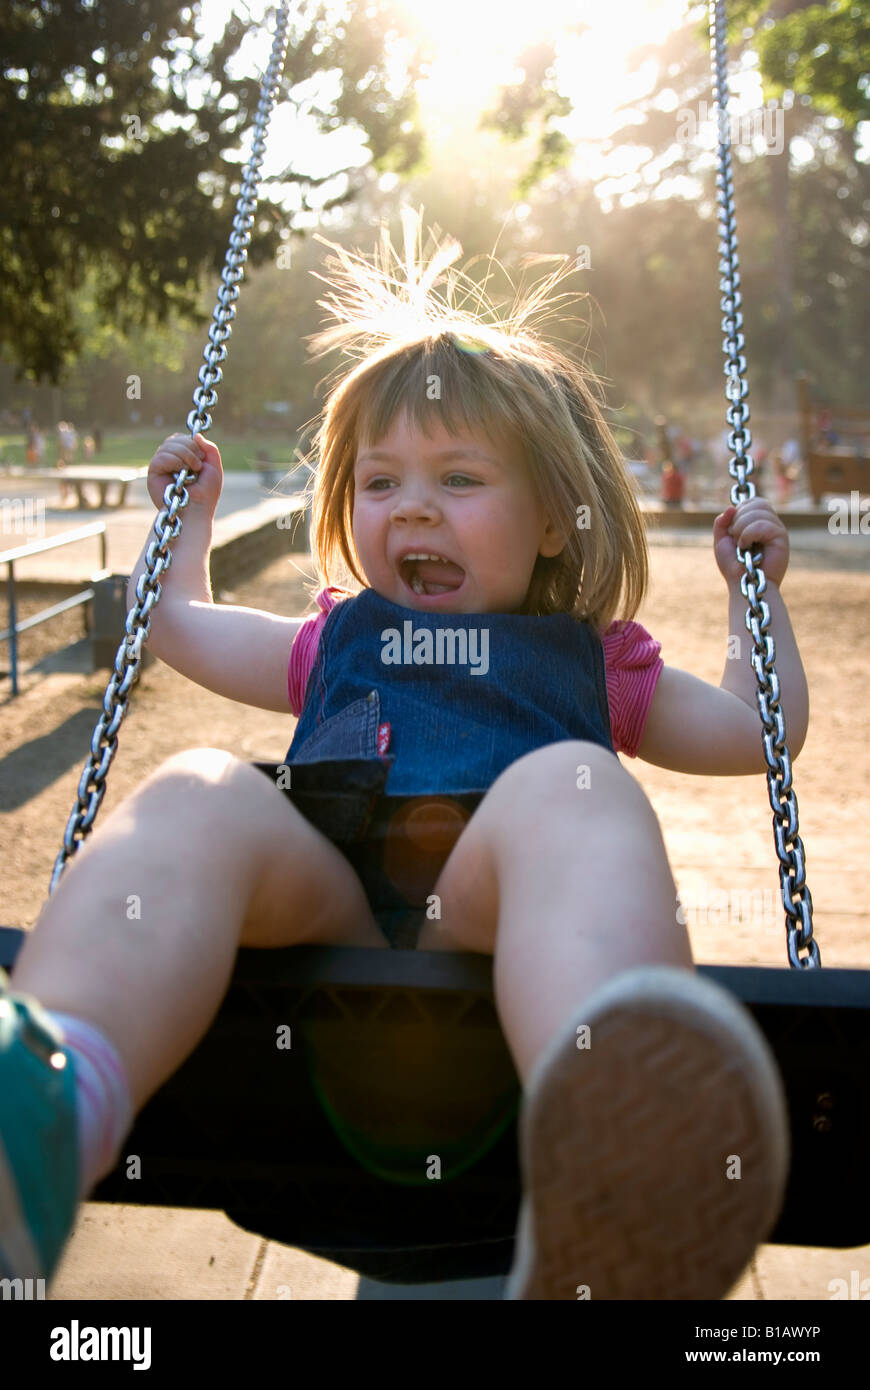 Girl (3-4) on swing, portrait Stock Photo